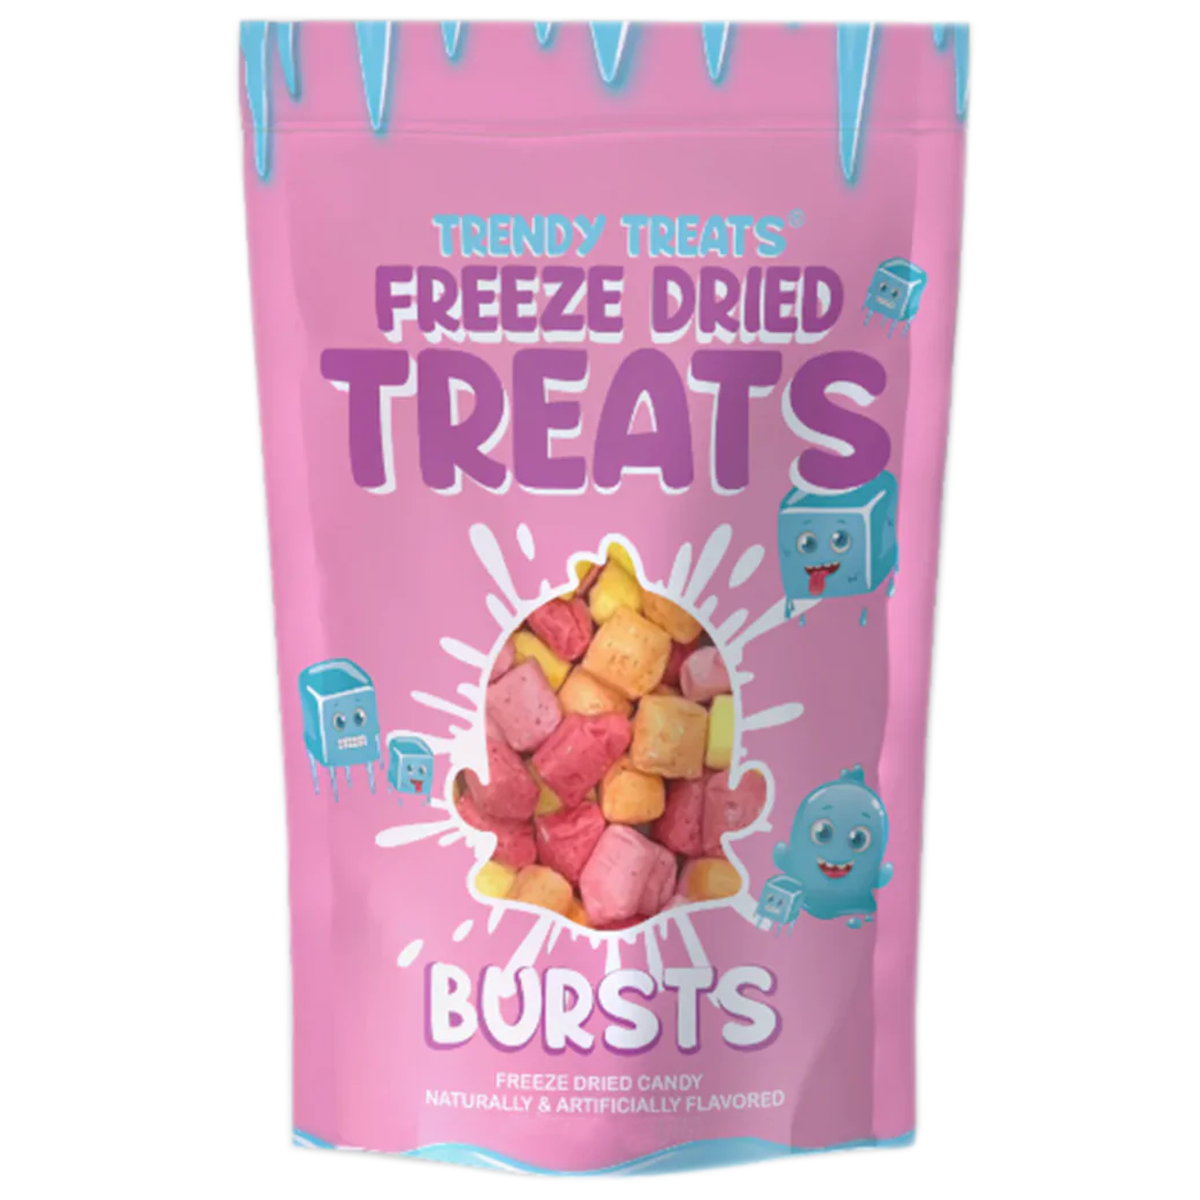 Trendy Treats Freeze Dried Treats Bursts 1.4oz